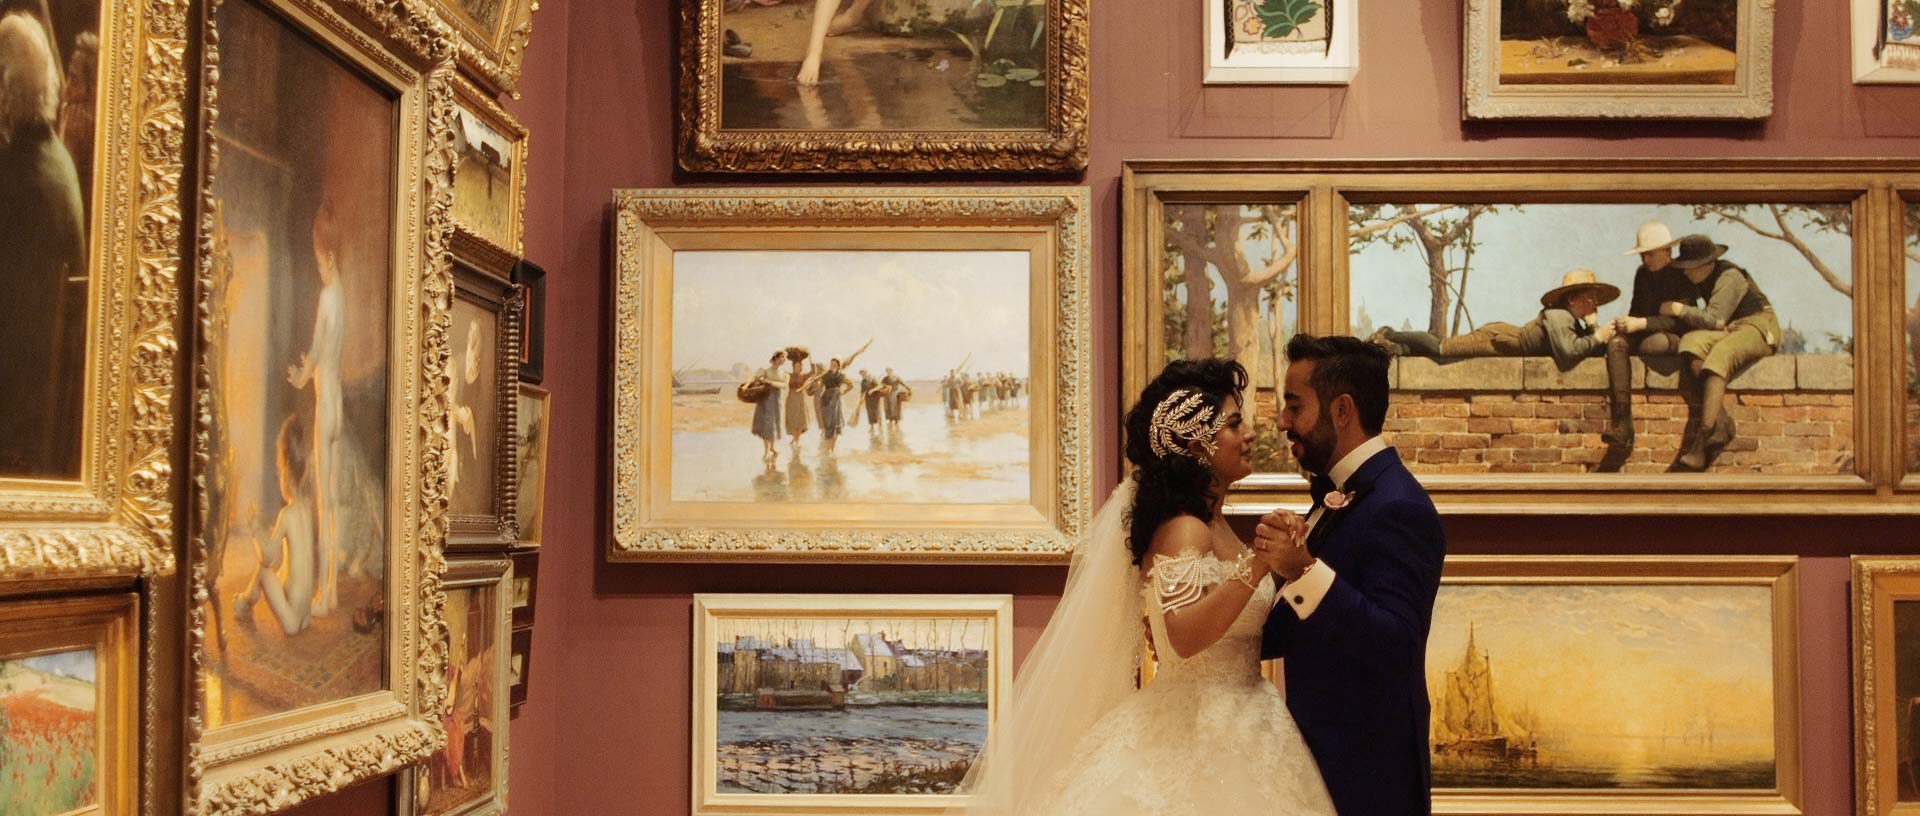 Wedding couple in art gallery